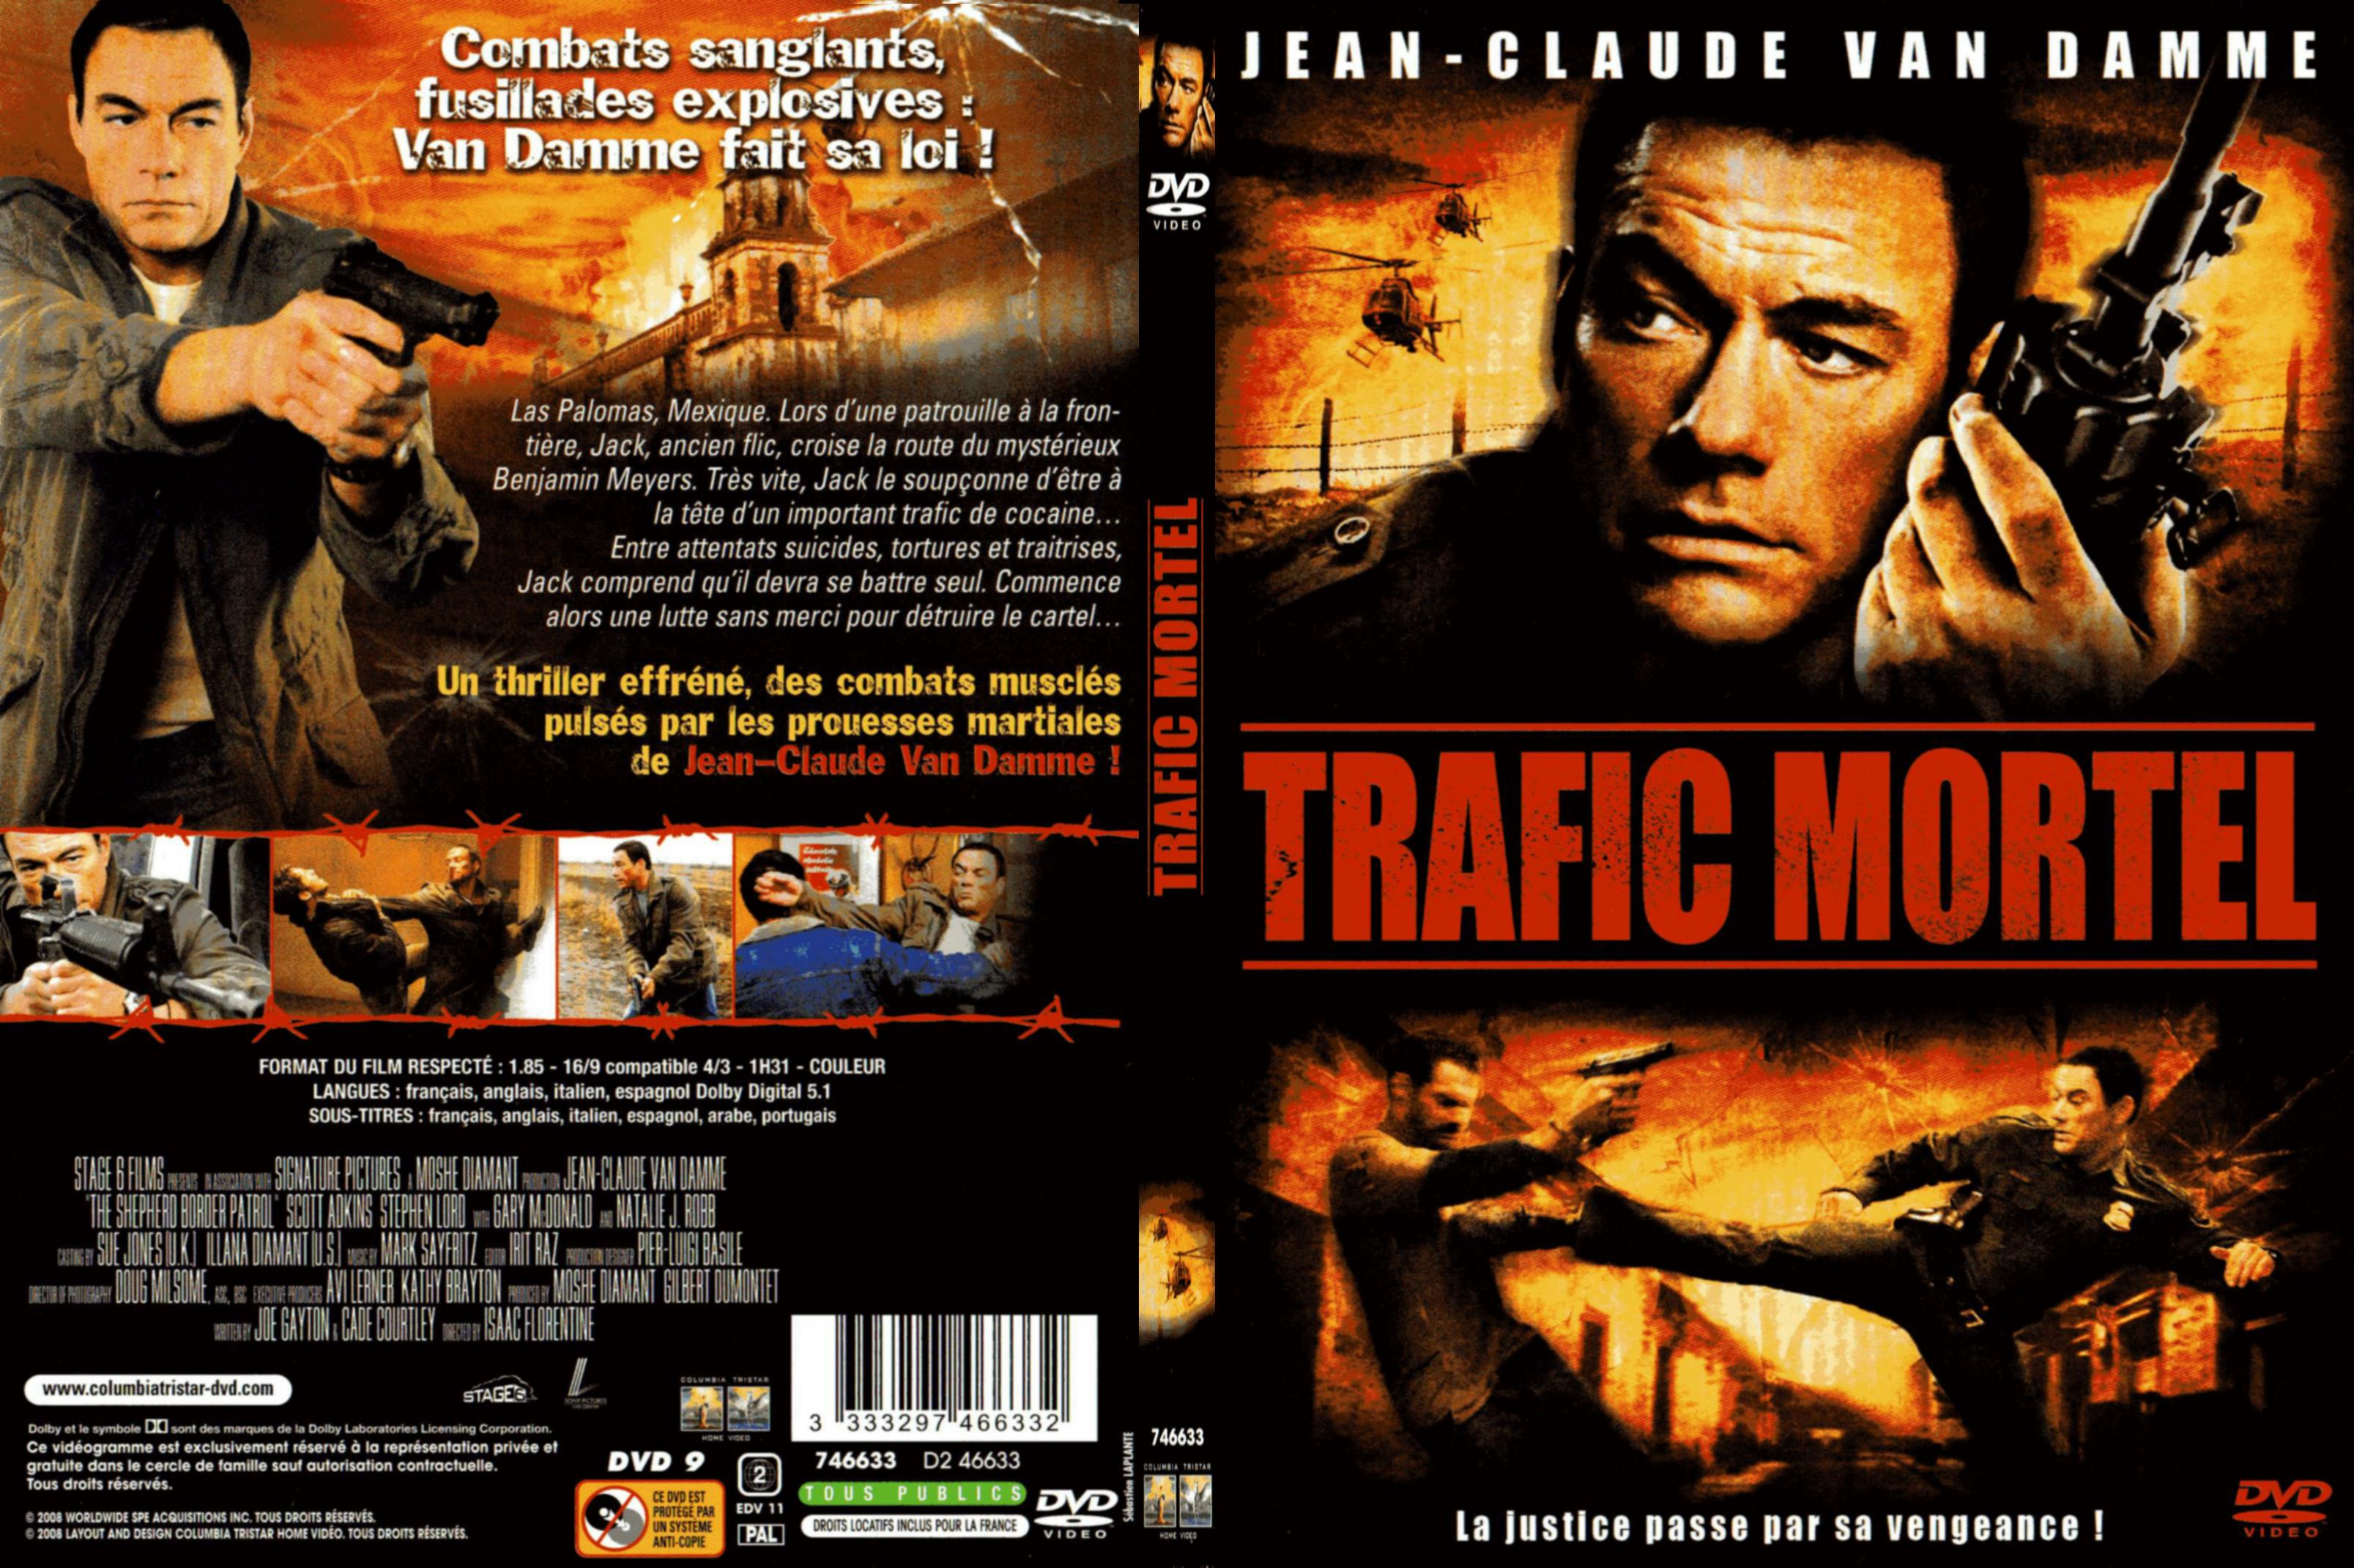 Jaquette DVD Trafic mortel - SLIM